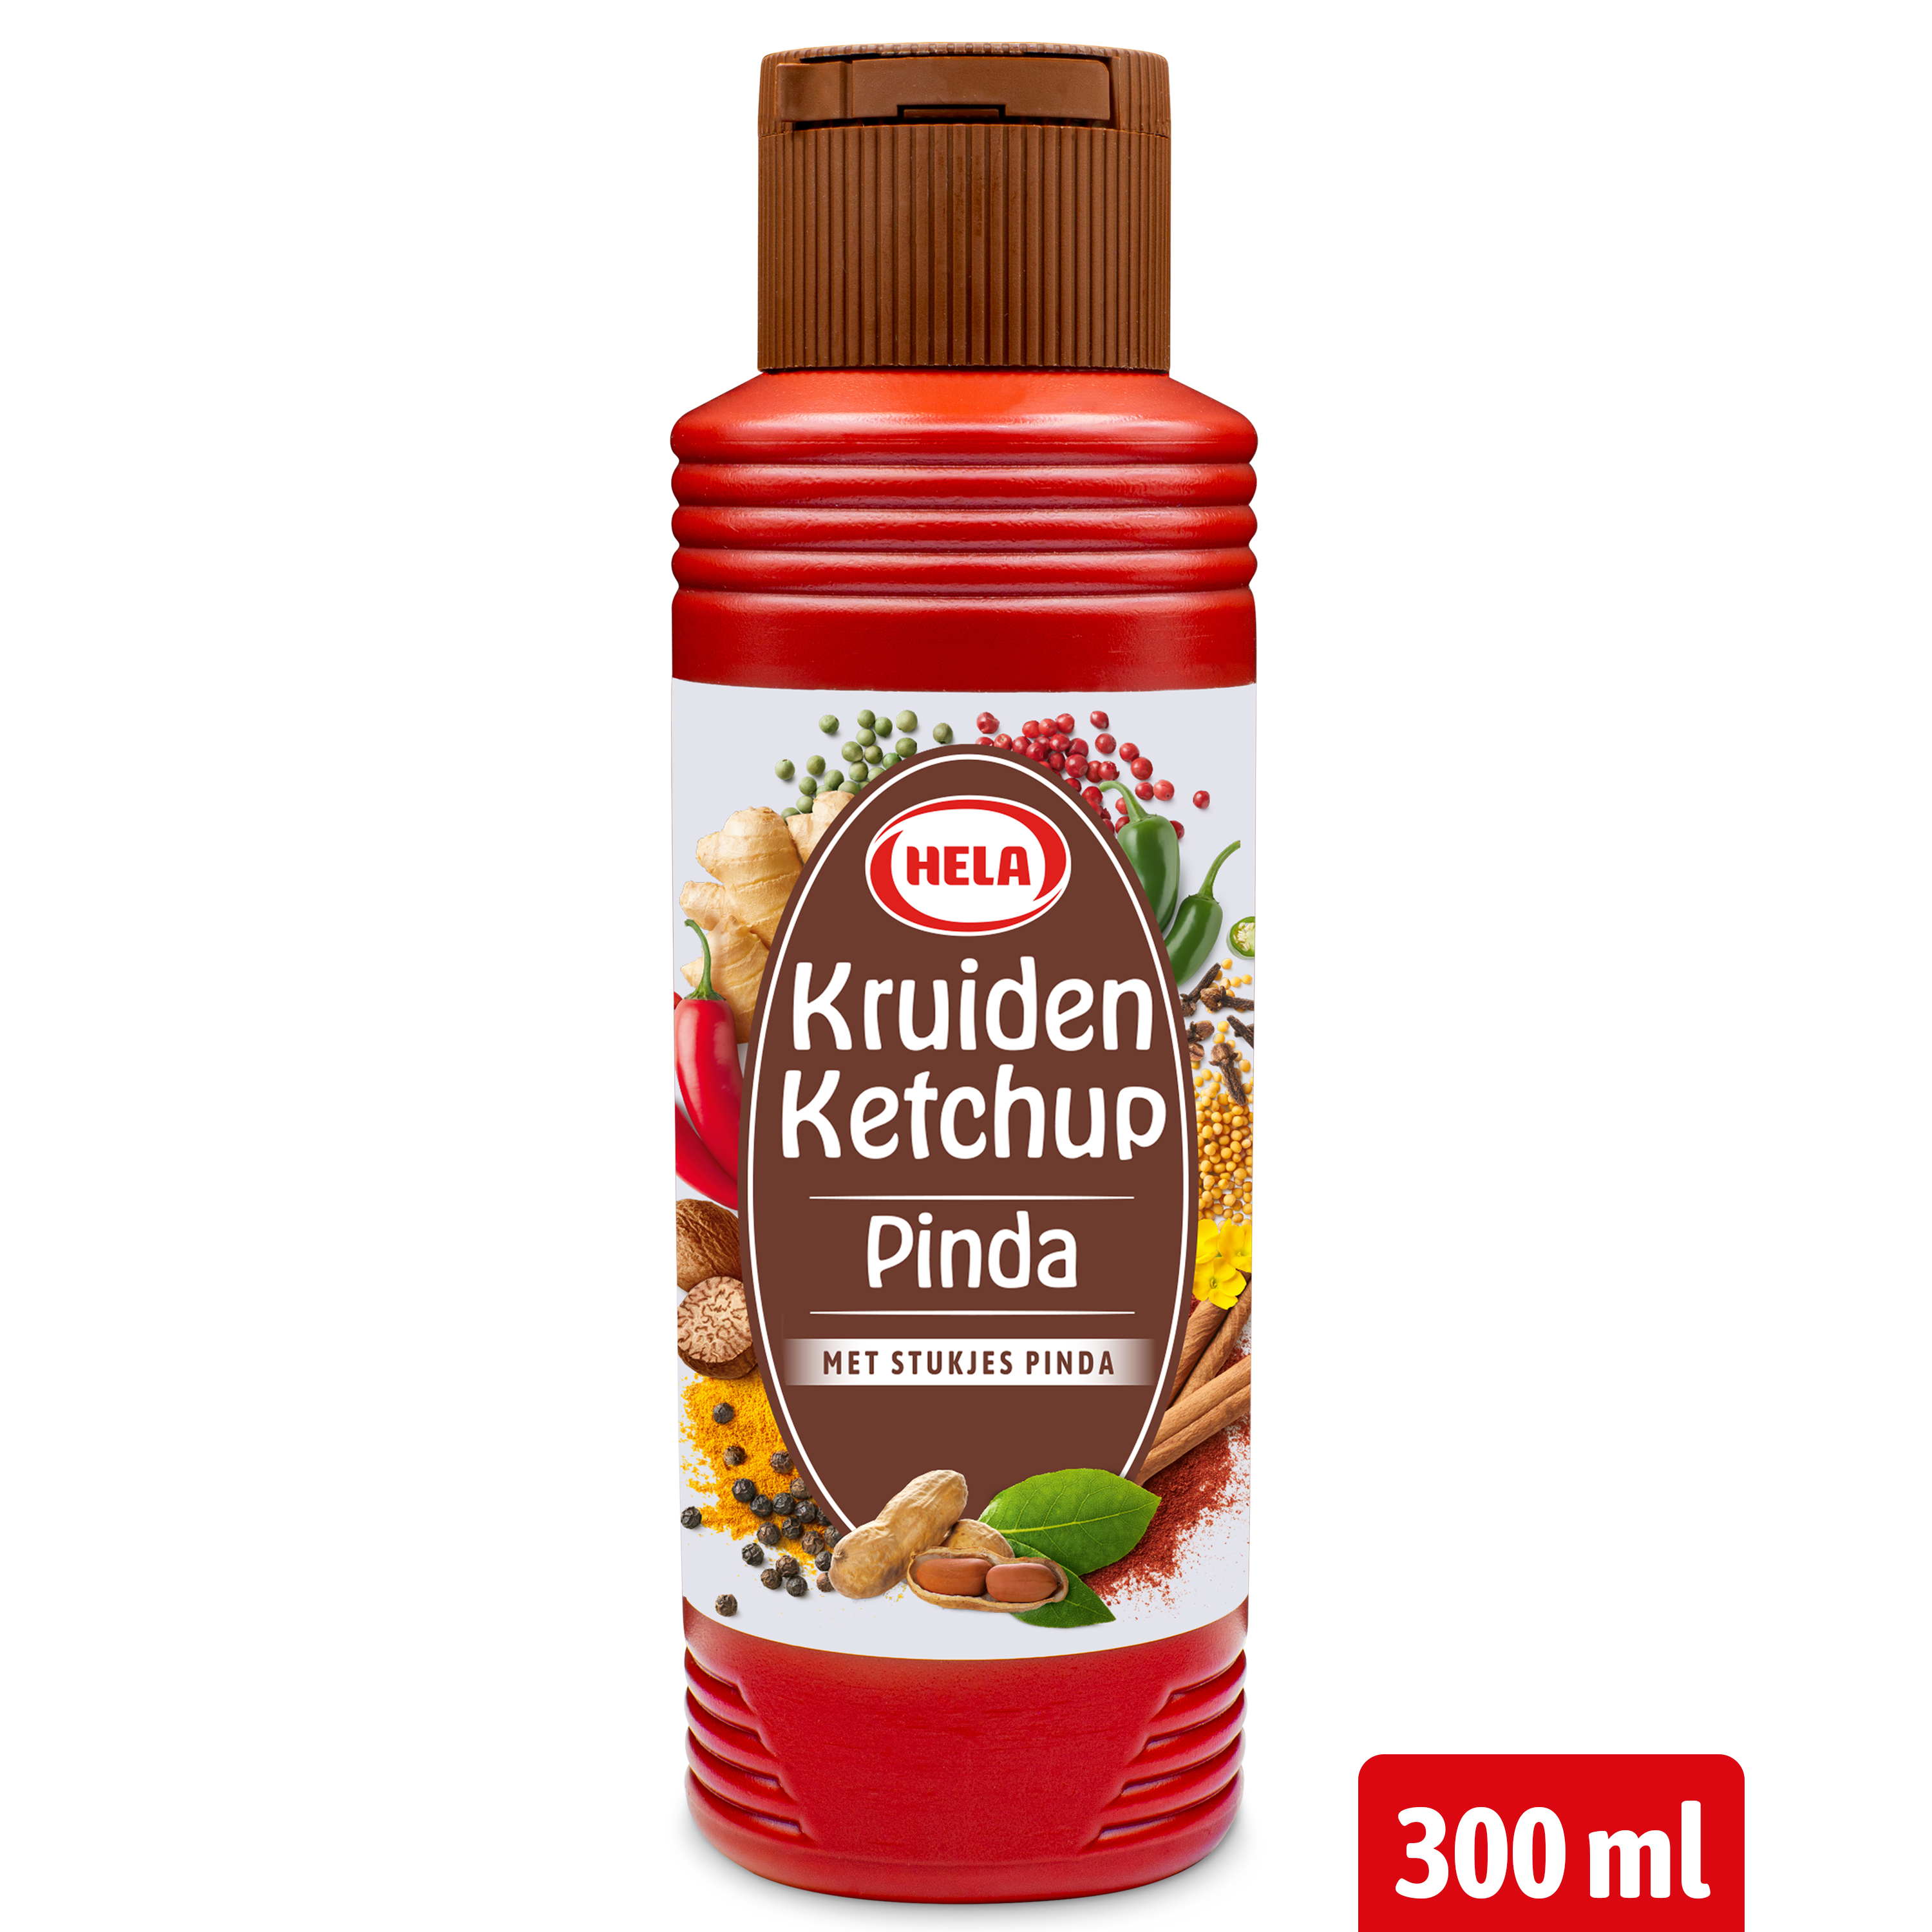 hela-kruiden-ketchup-pinda-6×300-ml.png